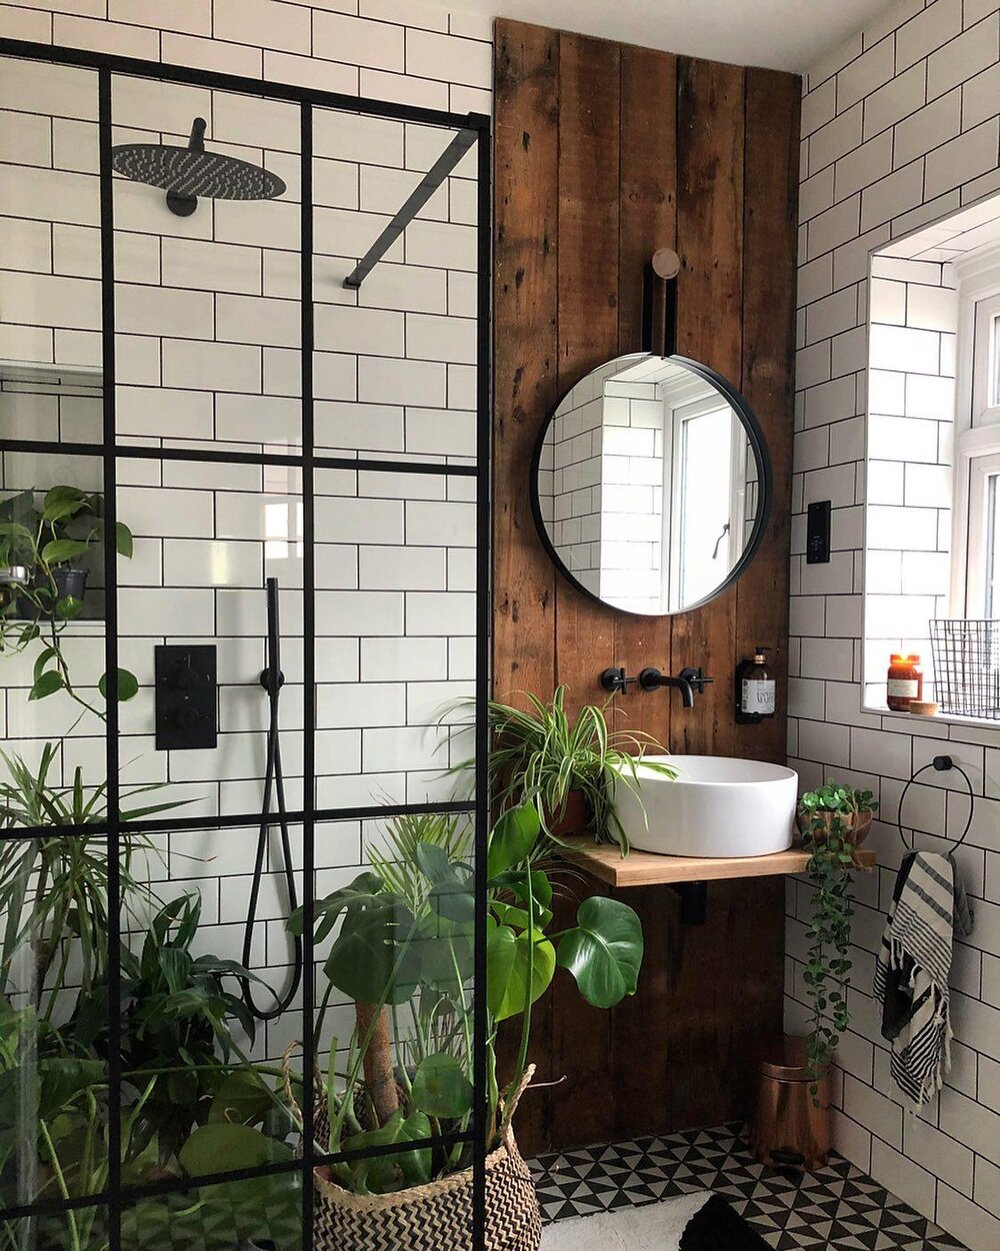 Small Bathroom Design Ideas How To Make A Bathroom Look Bigger The Nordroom